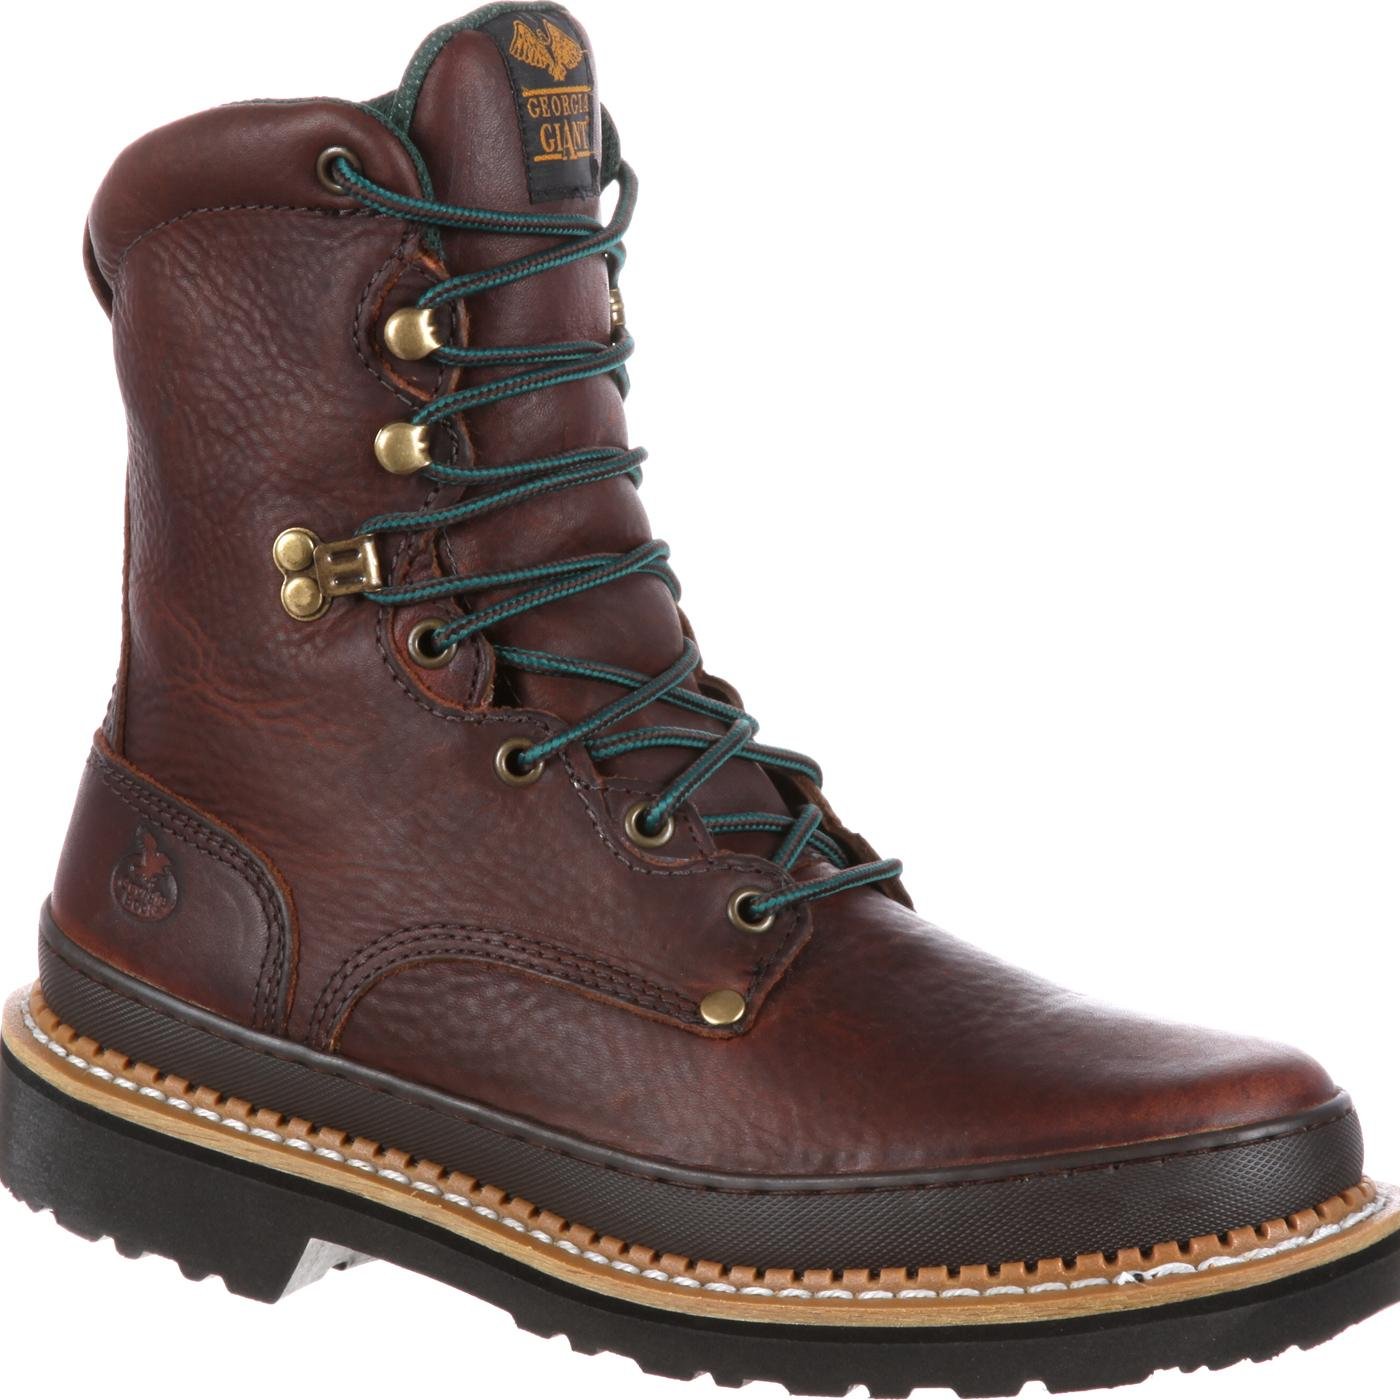 Georgia Boot - Men's 6 Brown Leather Work Boot, #G6274